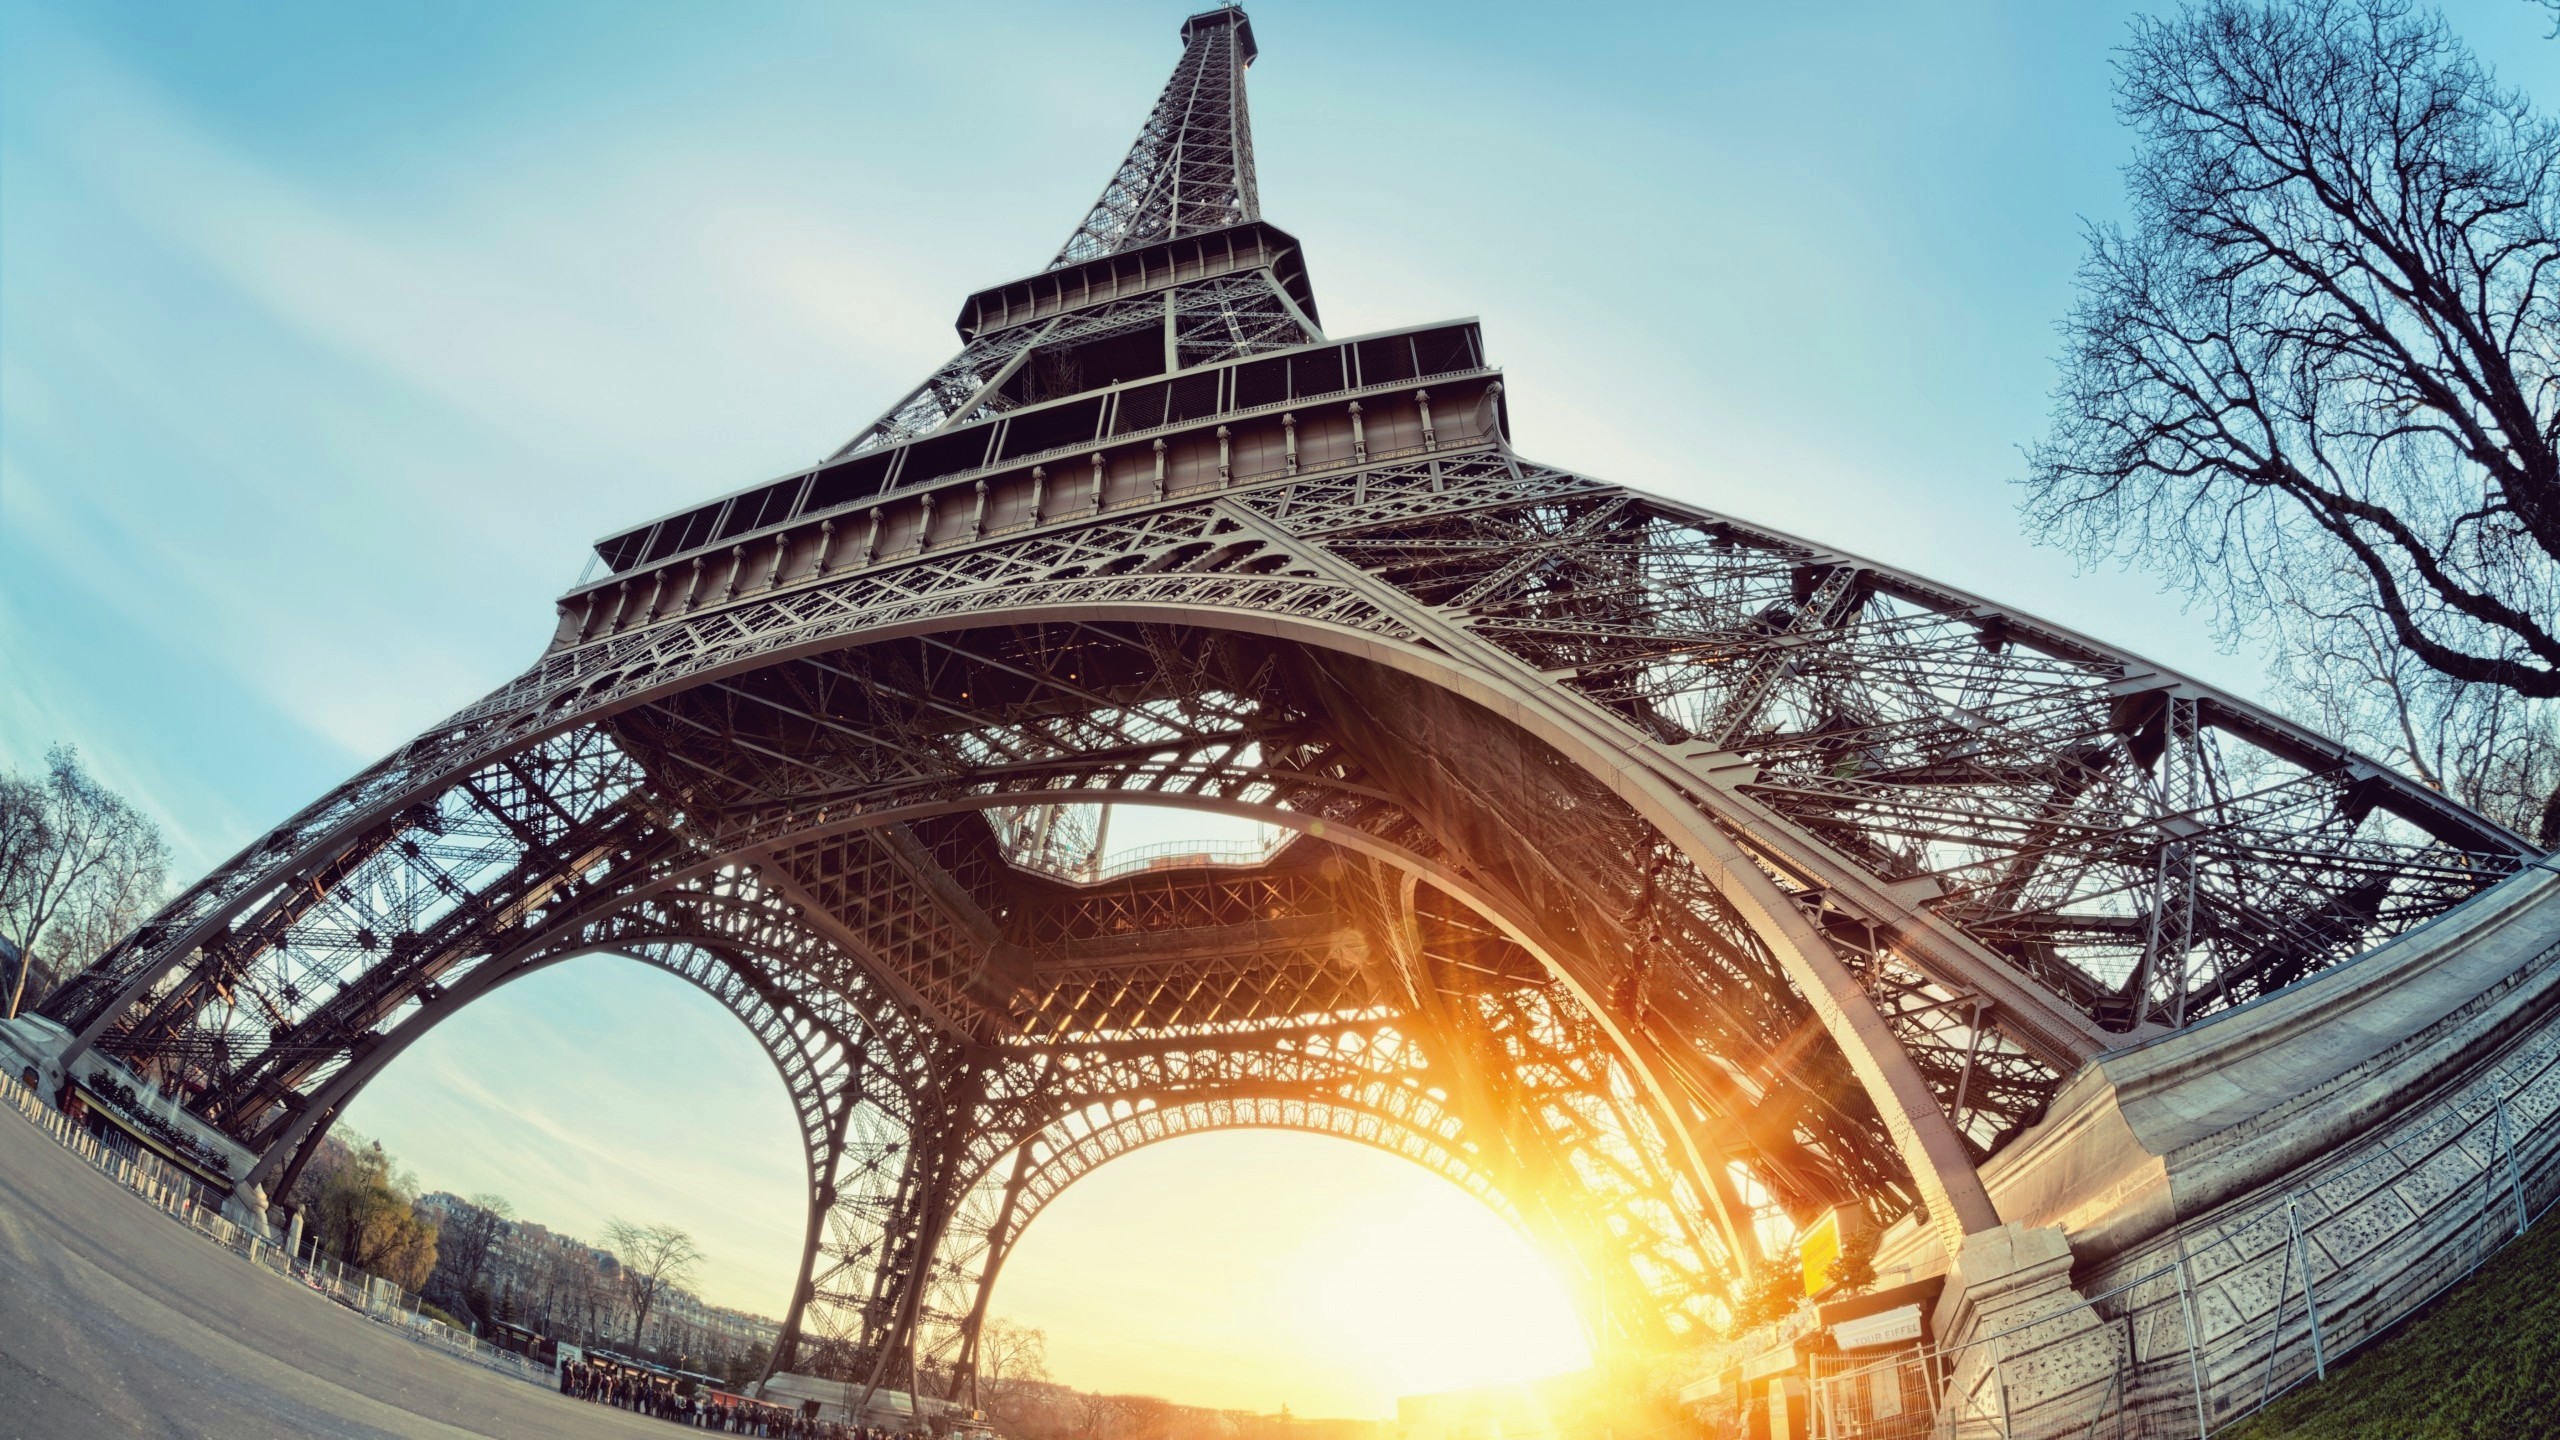 General 2560x1440 Paris Eiffel Tower France sunset construction sunlight city low-angle landmark Europe